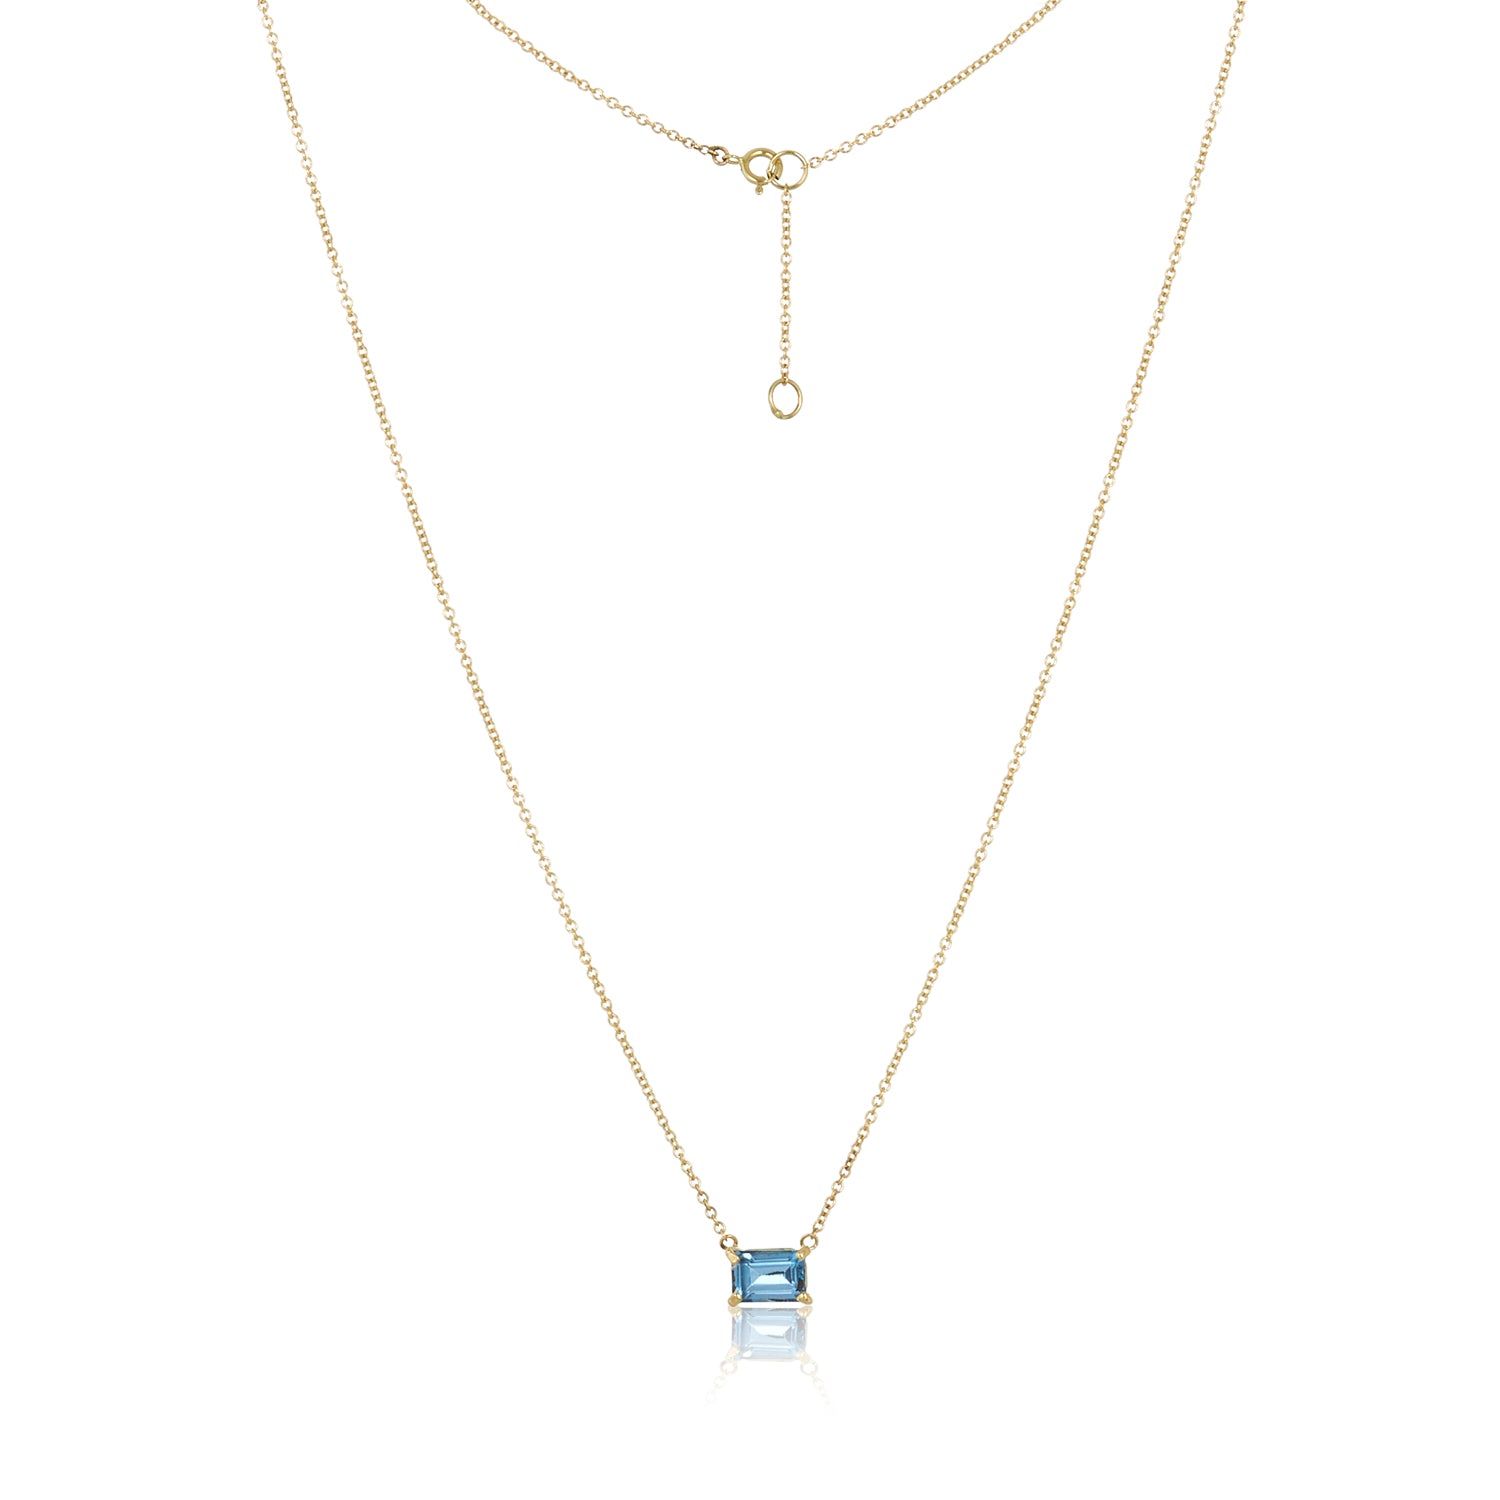 Petite Blue Topaz Necklace in 14k